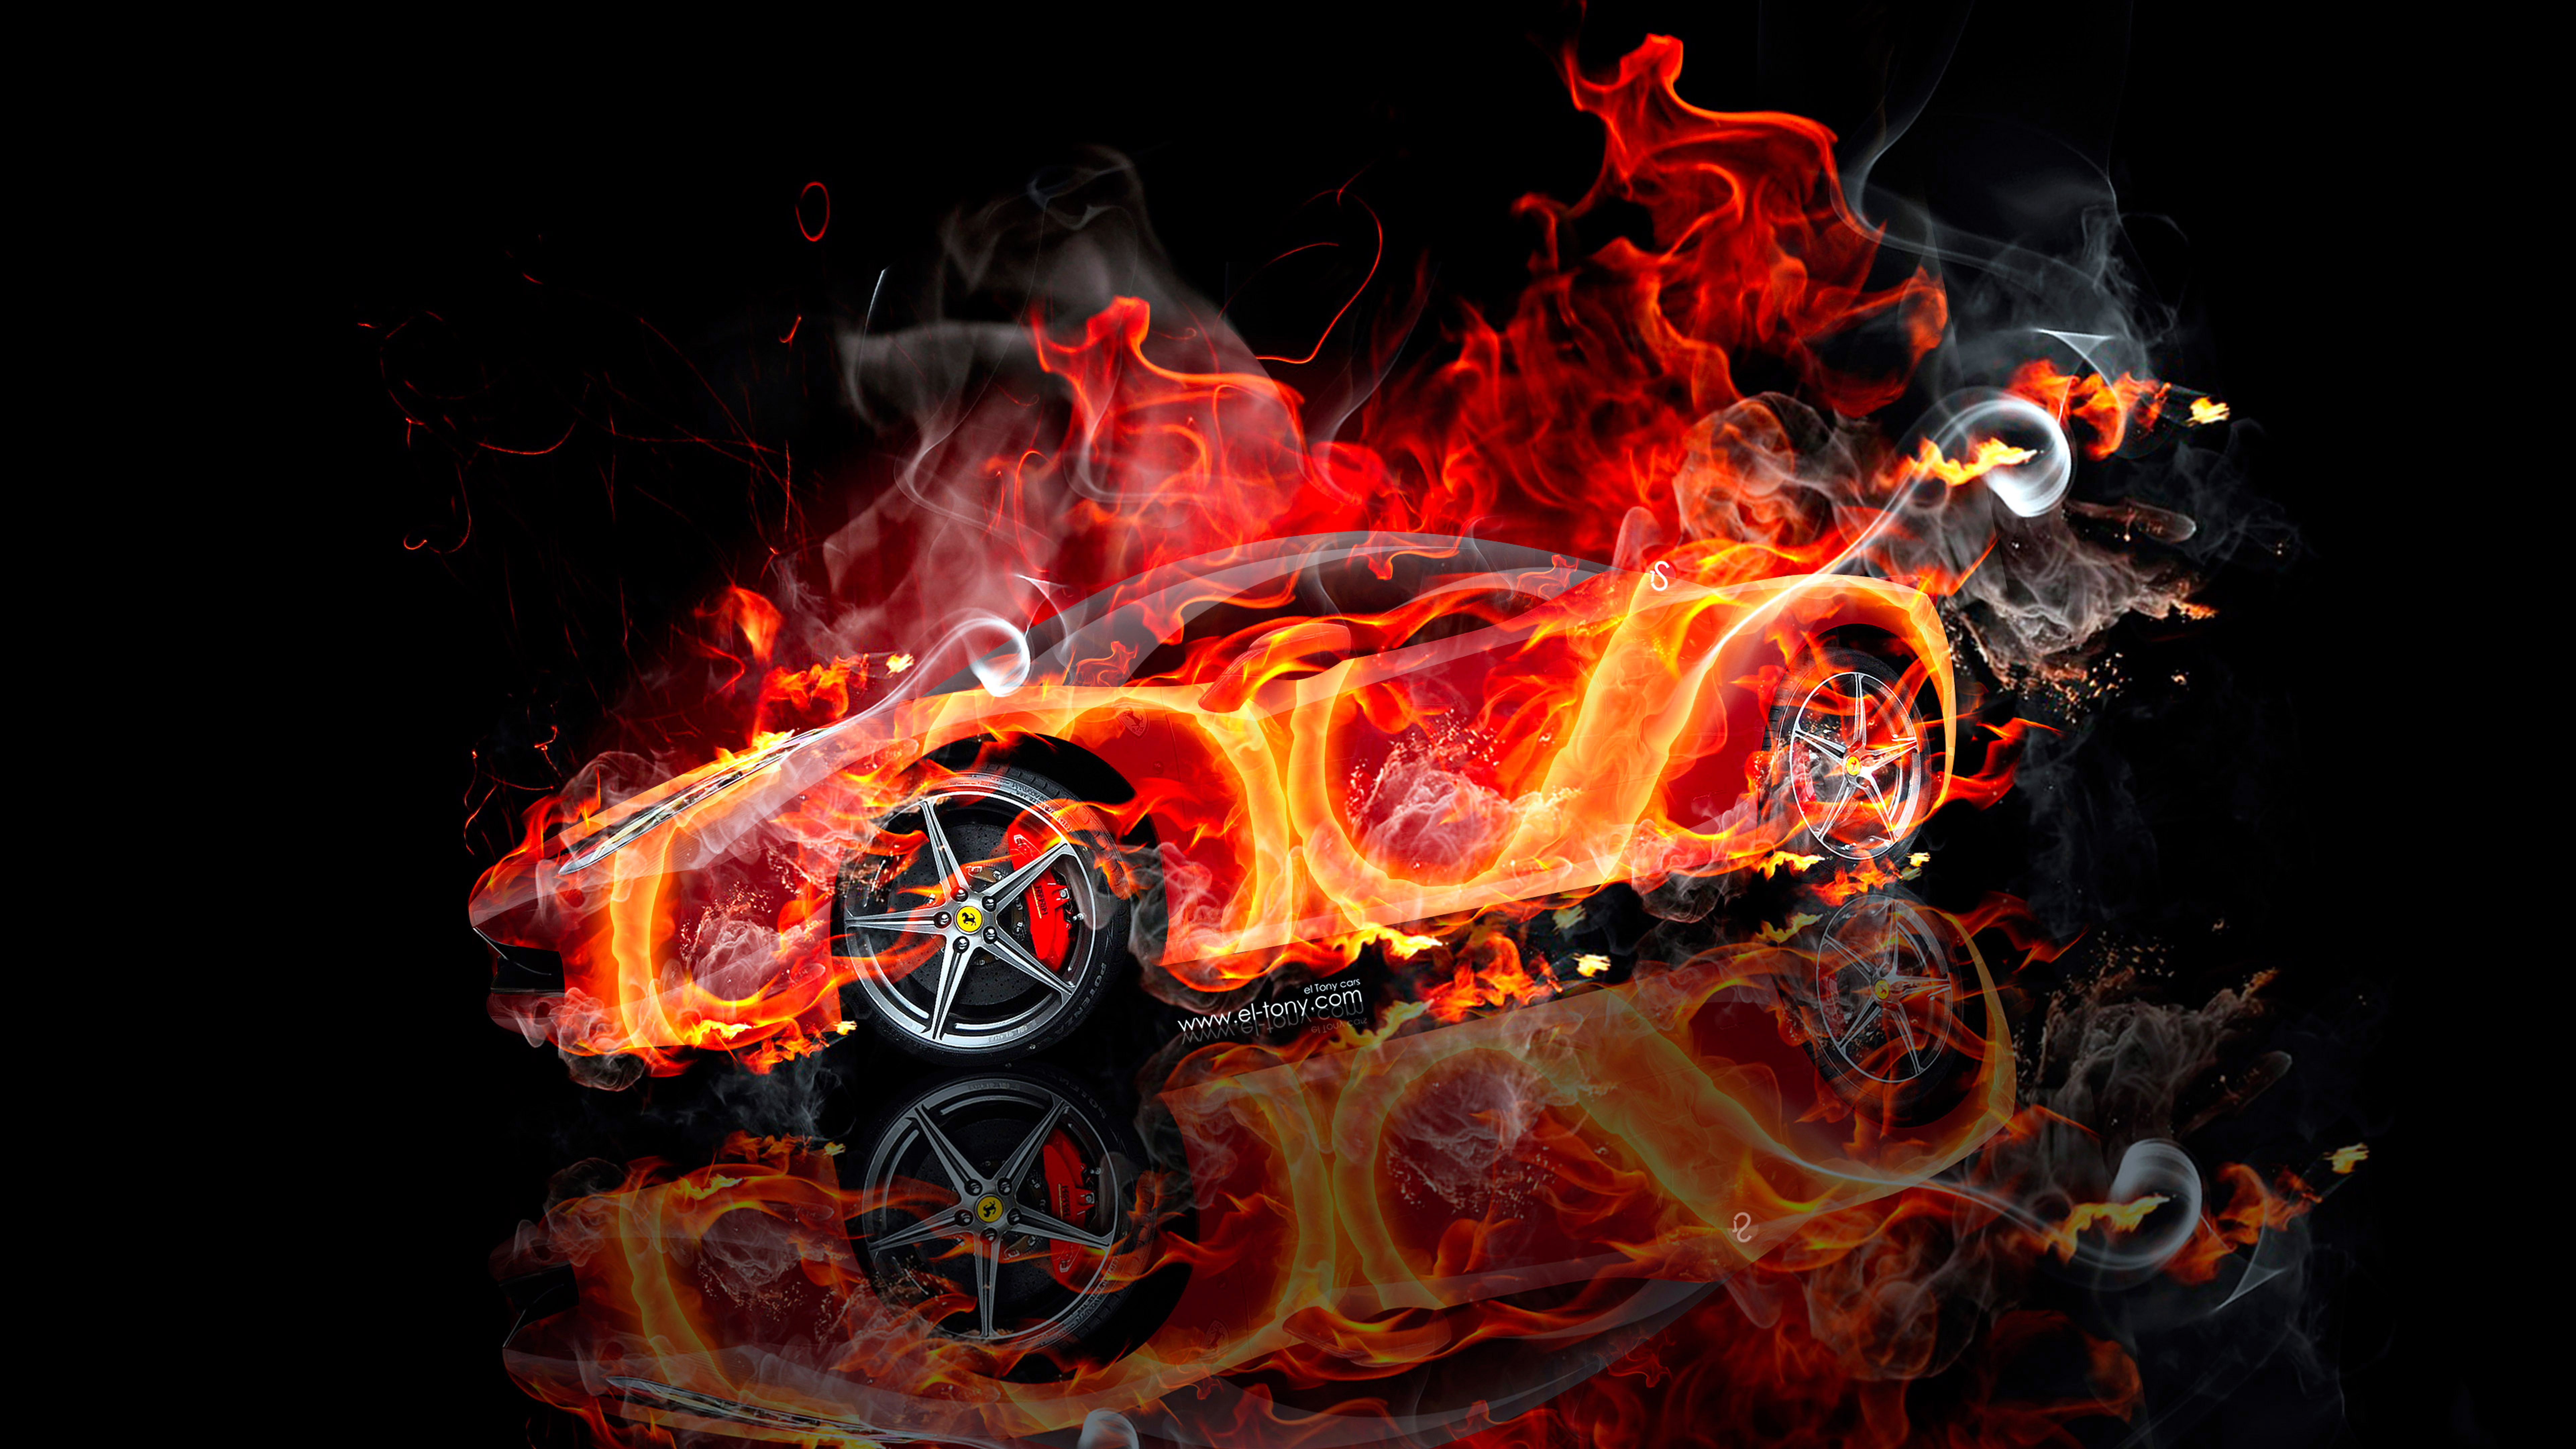 Ferrari-458-Italia-Super-Fire-Flame-Smoke-Art-Car